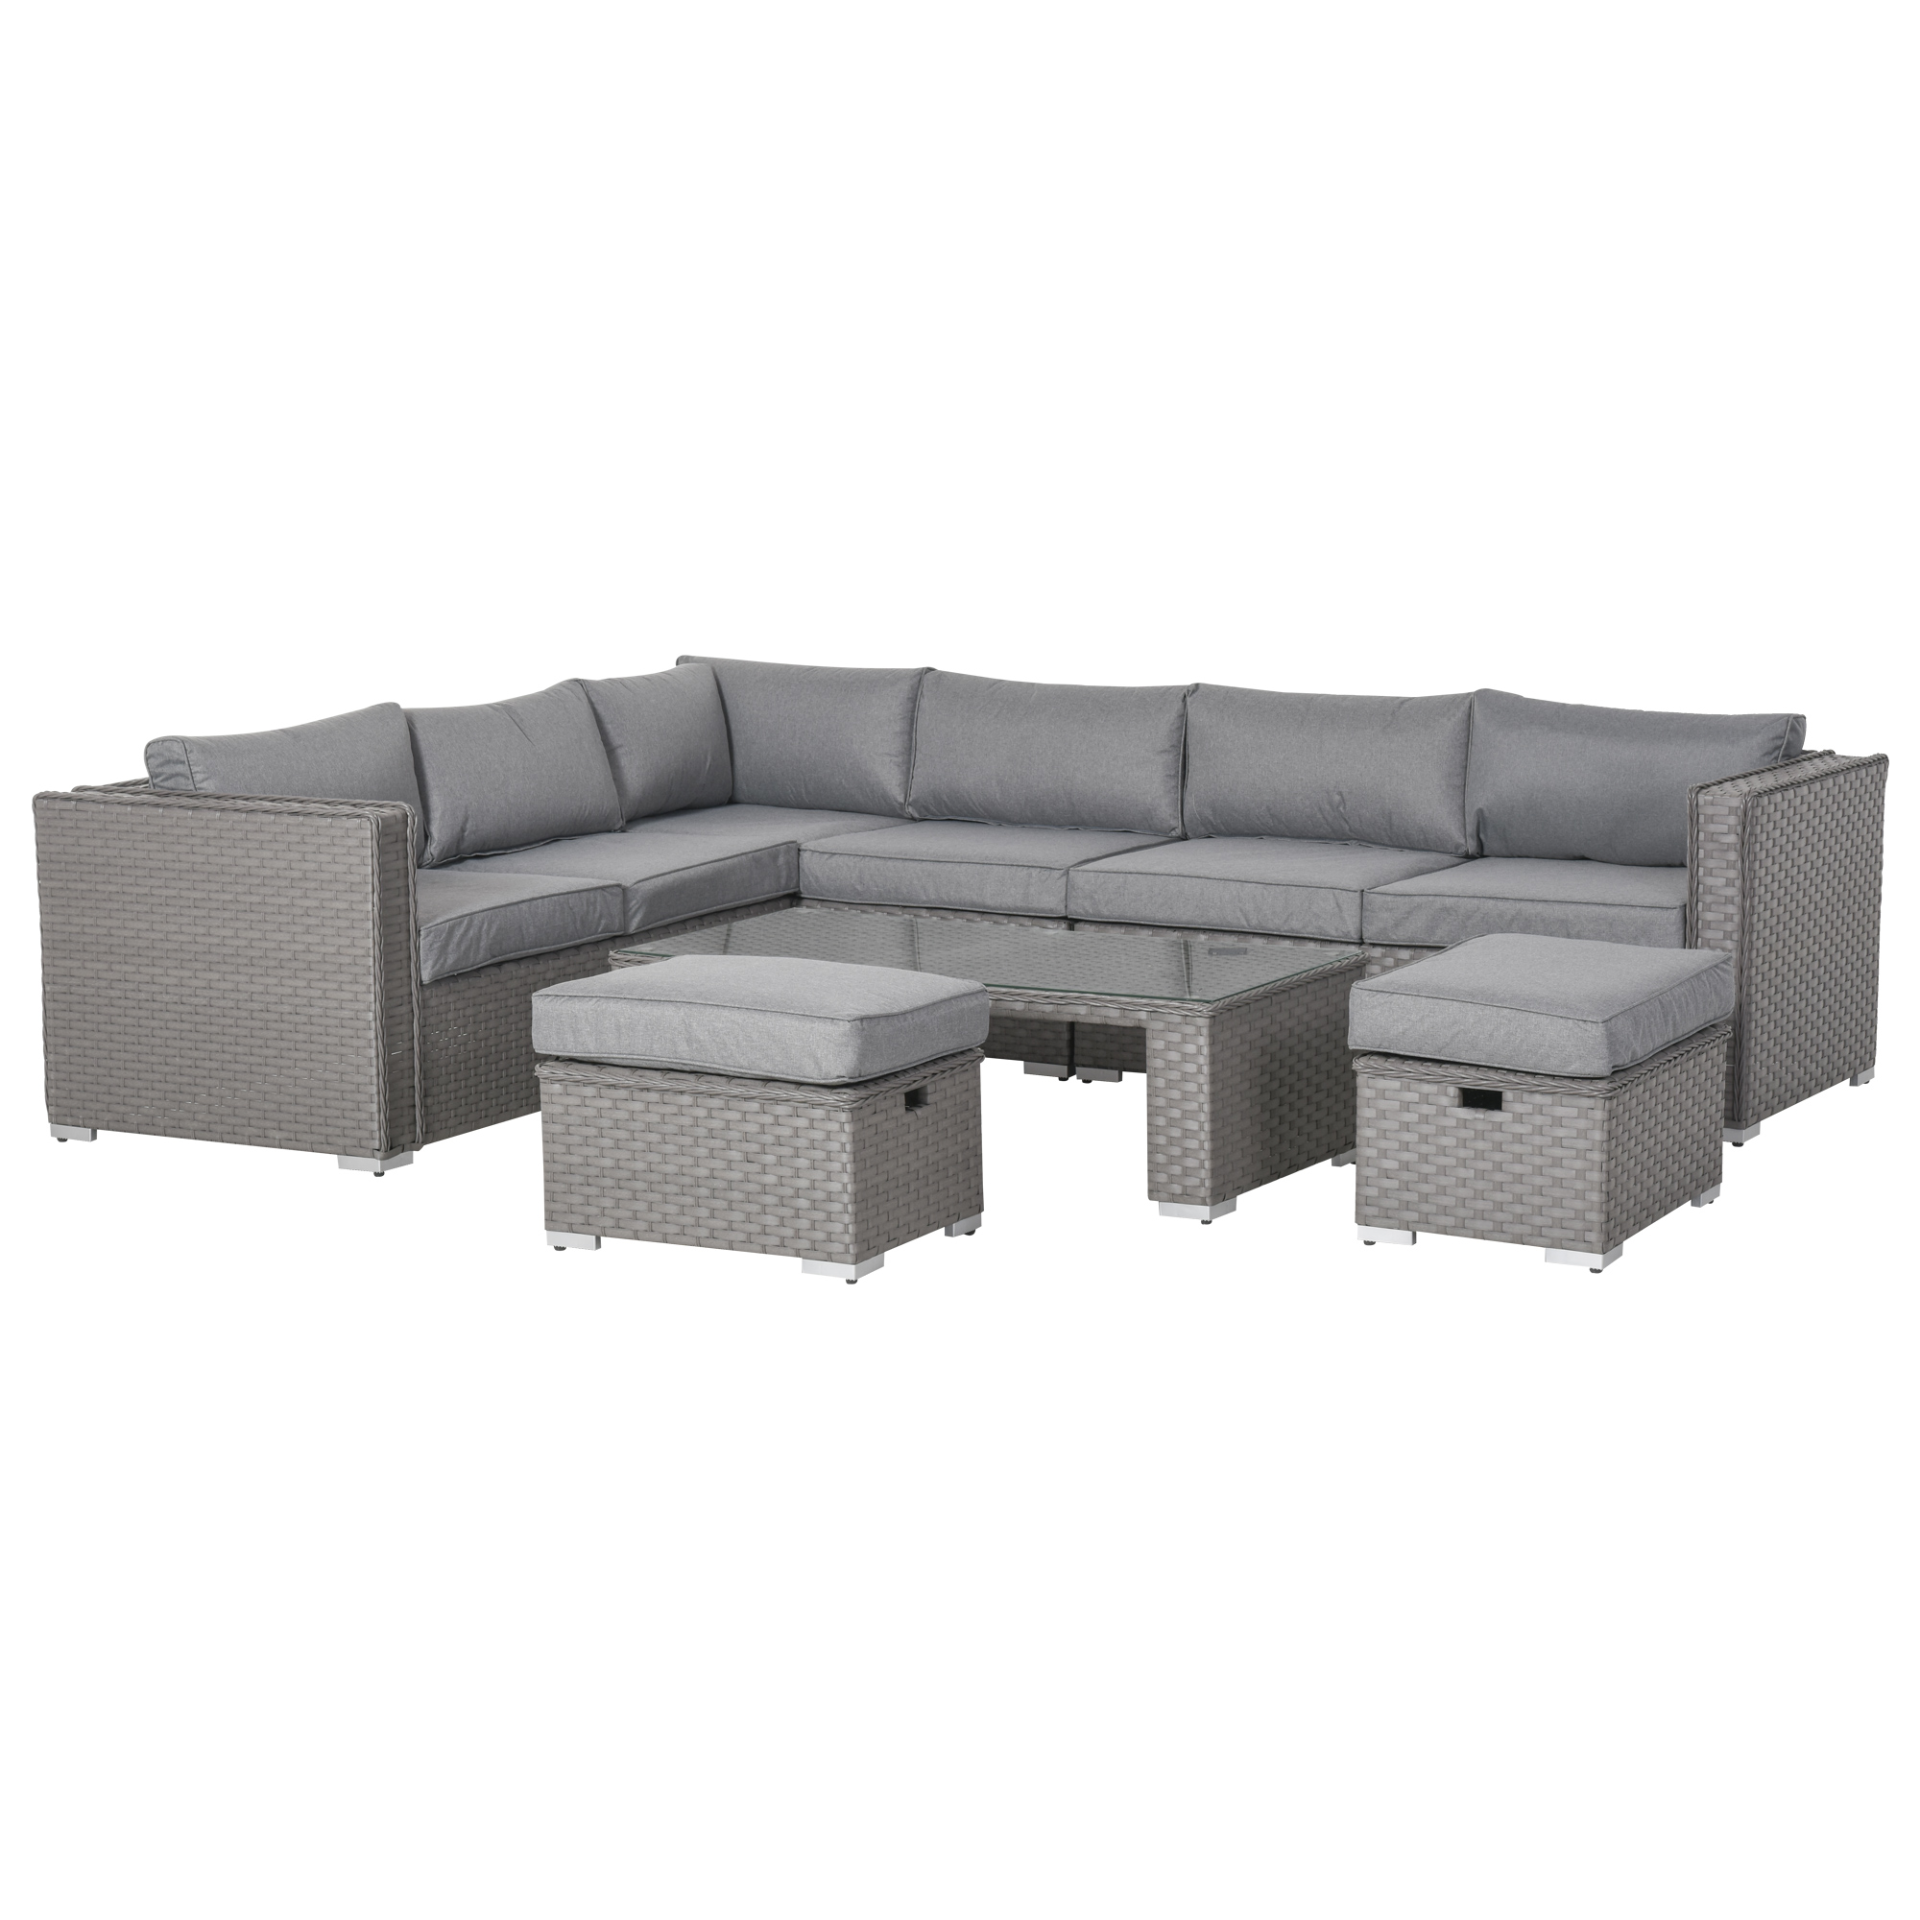 Outsunny 6 PCs PE Rattan Wicker Corner Sofa Set, Outdoor Aluminum Conservatory Furniture Lawn Patio Coffee Table Footstool w/ Cushion - Grey